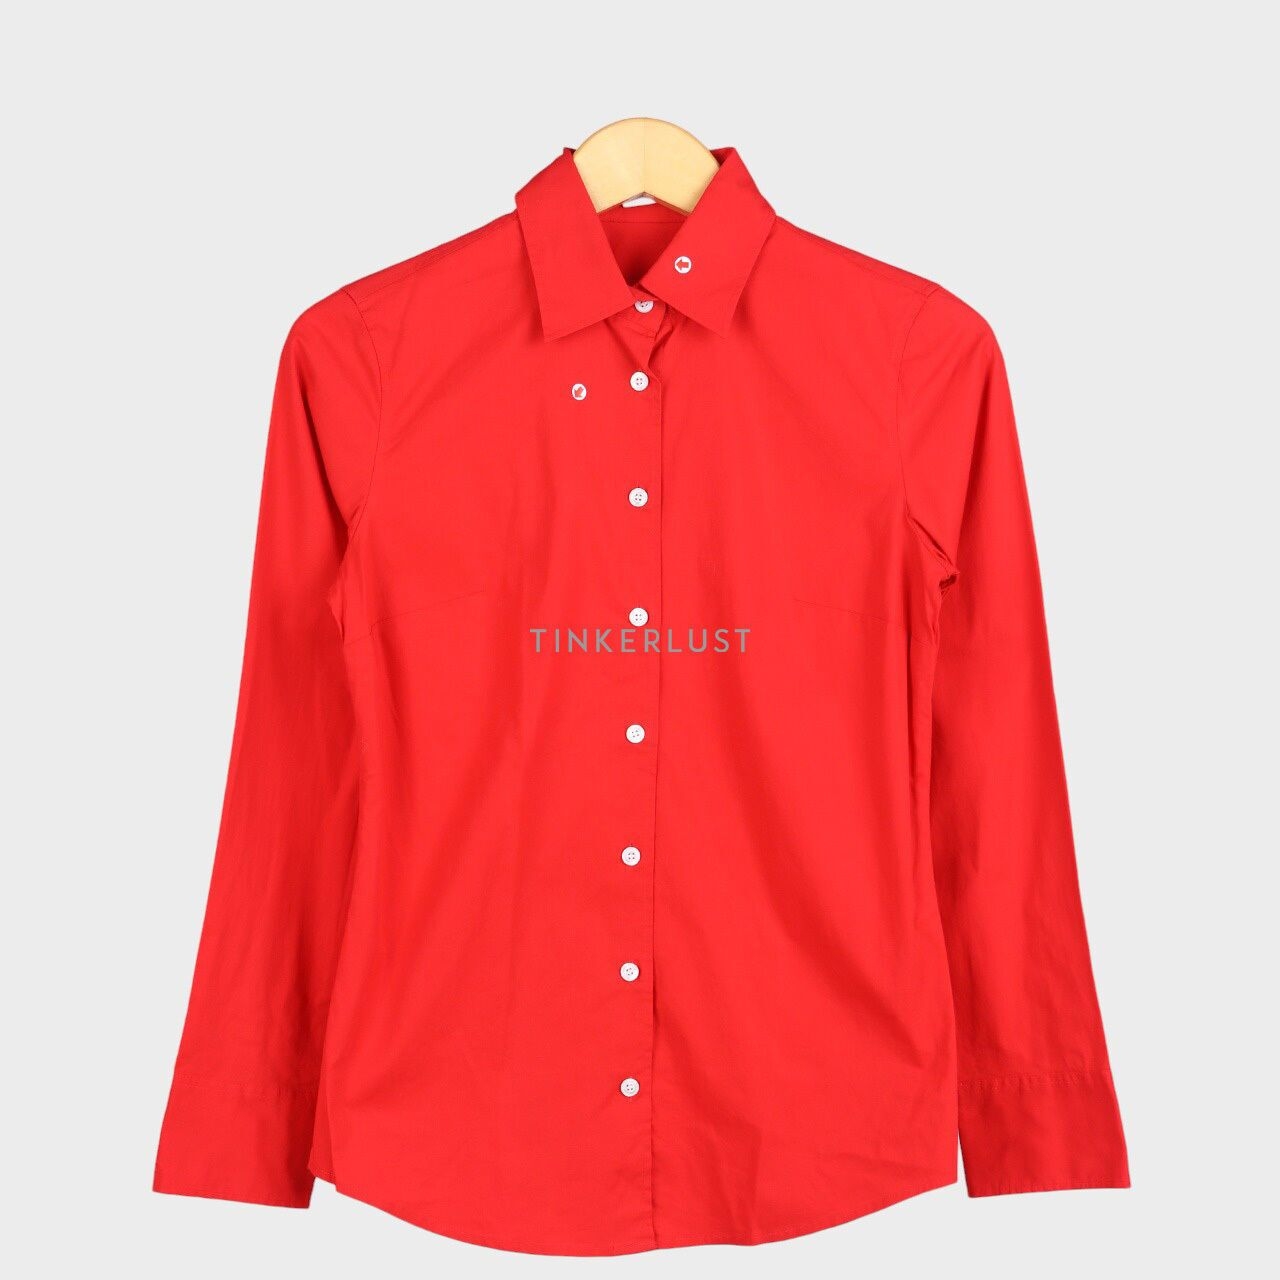 J.CREW Red Shirt